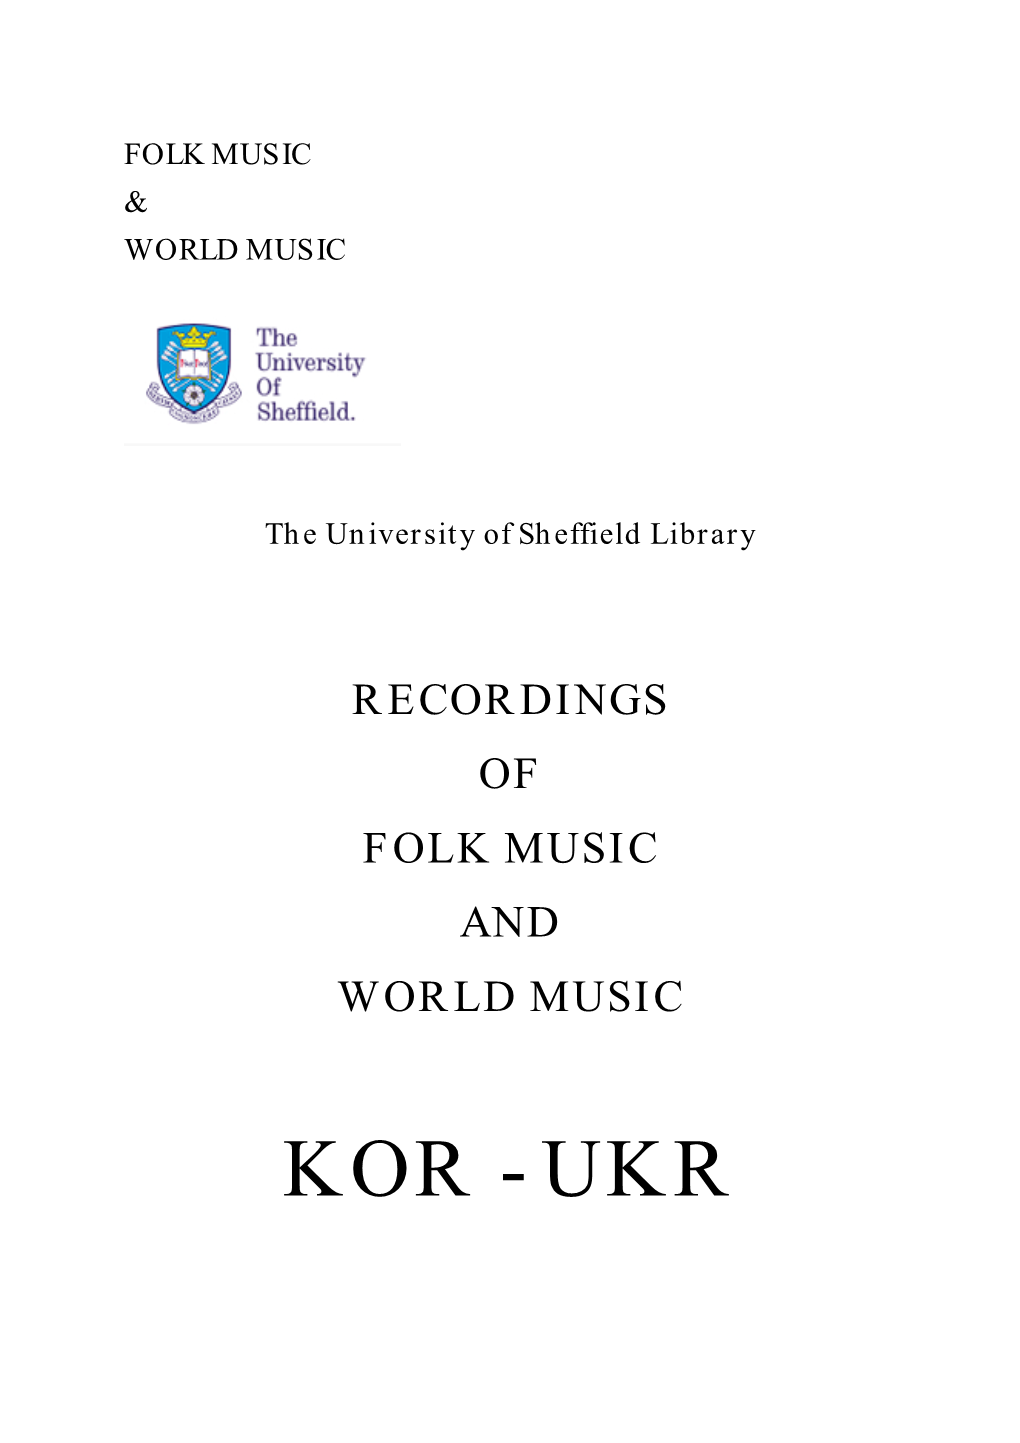 KOR - UKR the Garland Encyclopedia of World Music